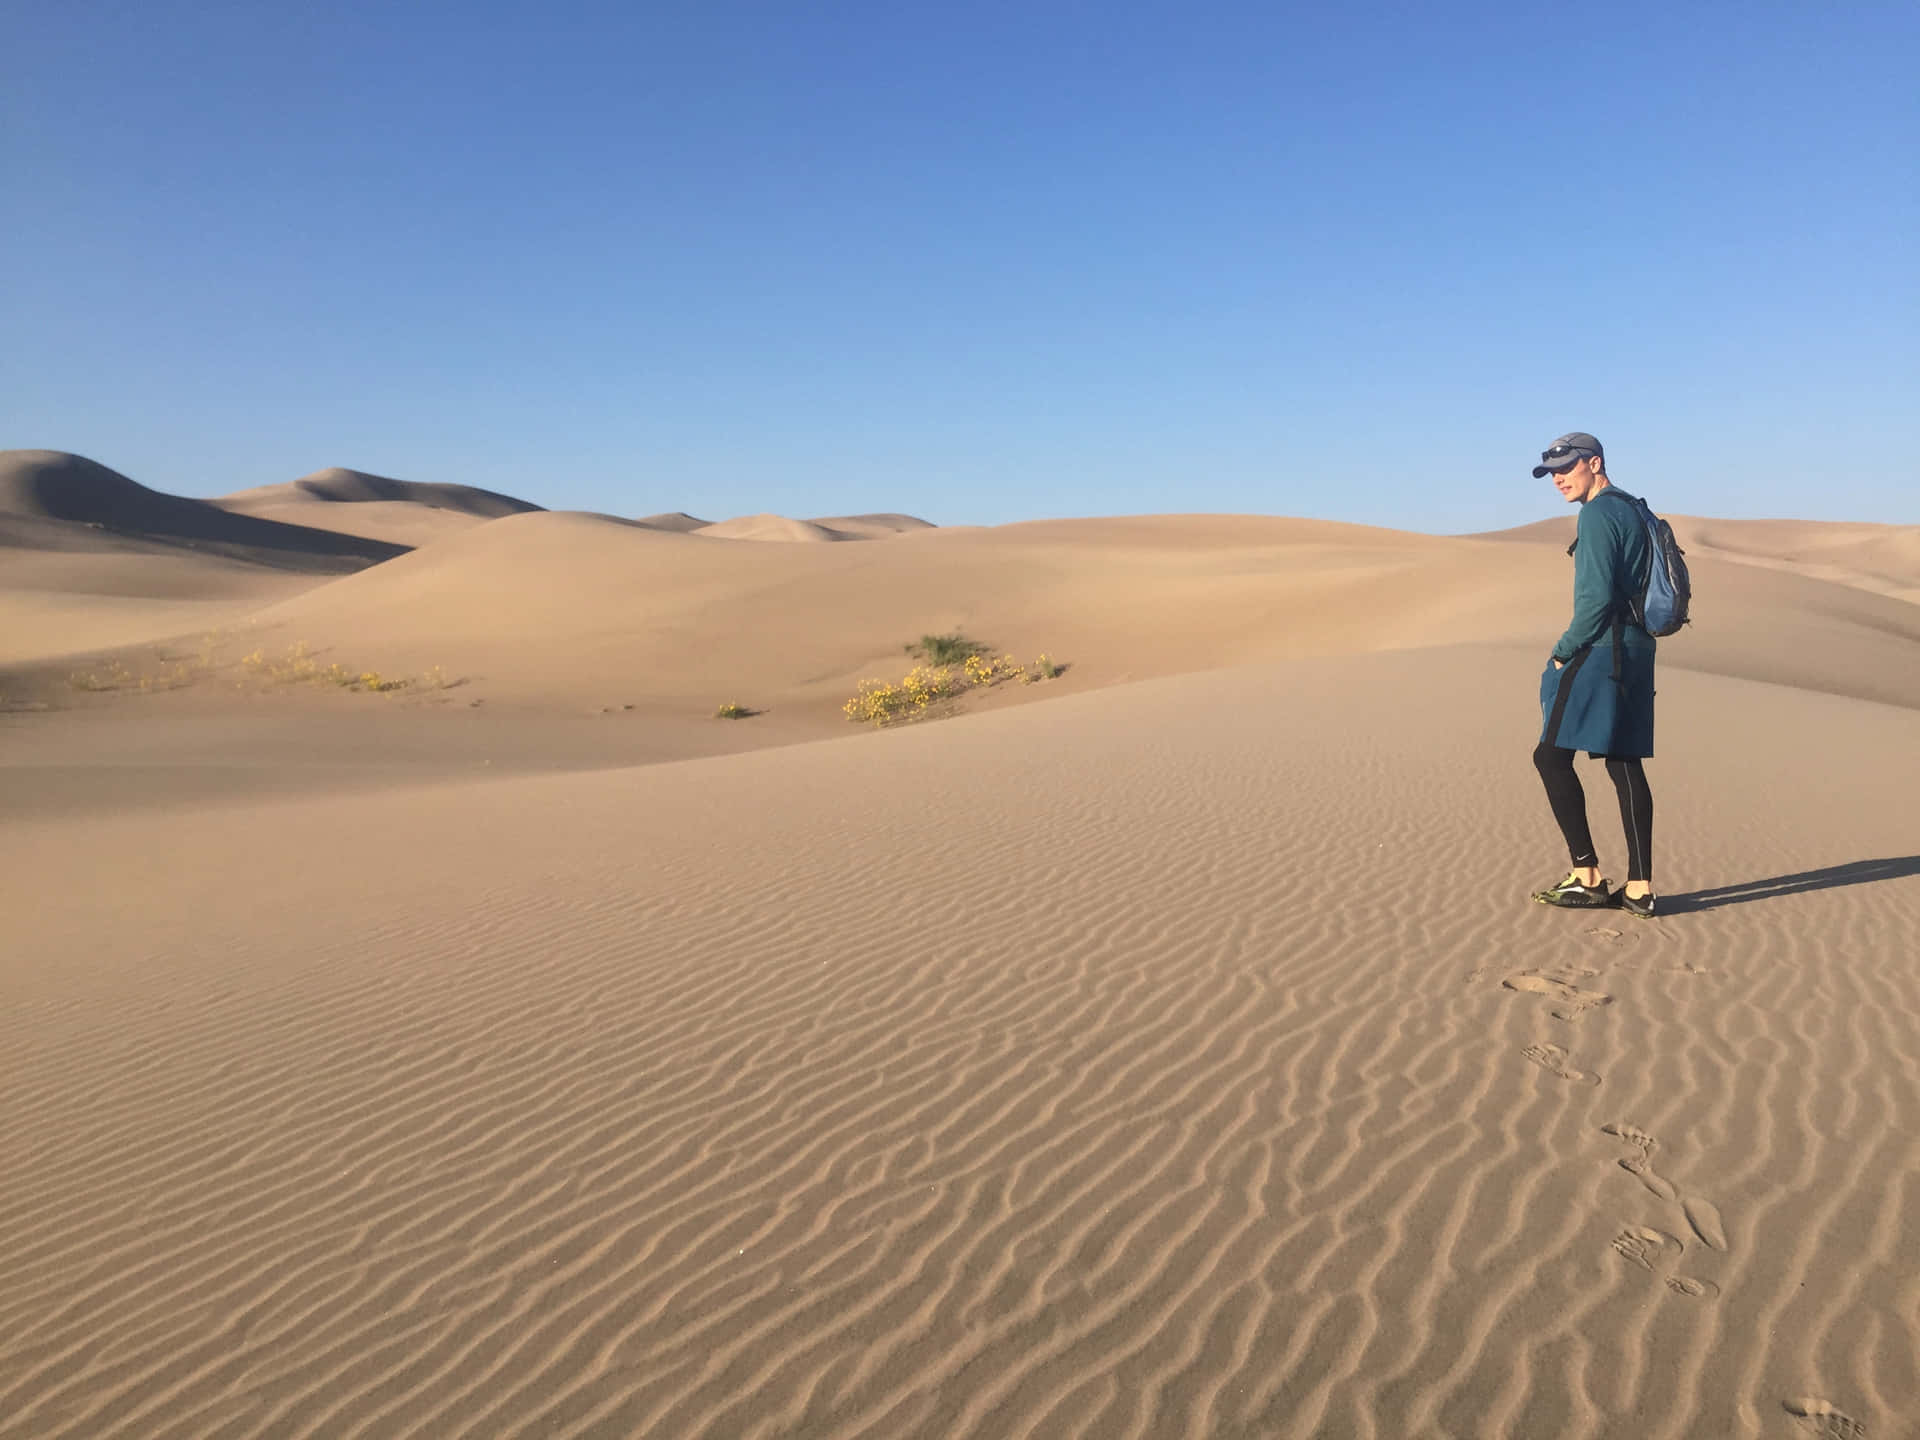 The desert of Dune, a sci-fi classic